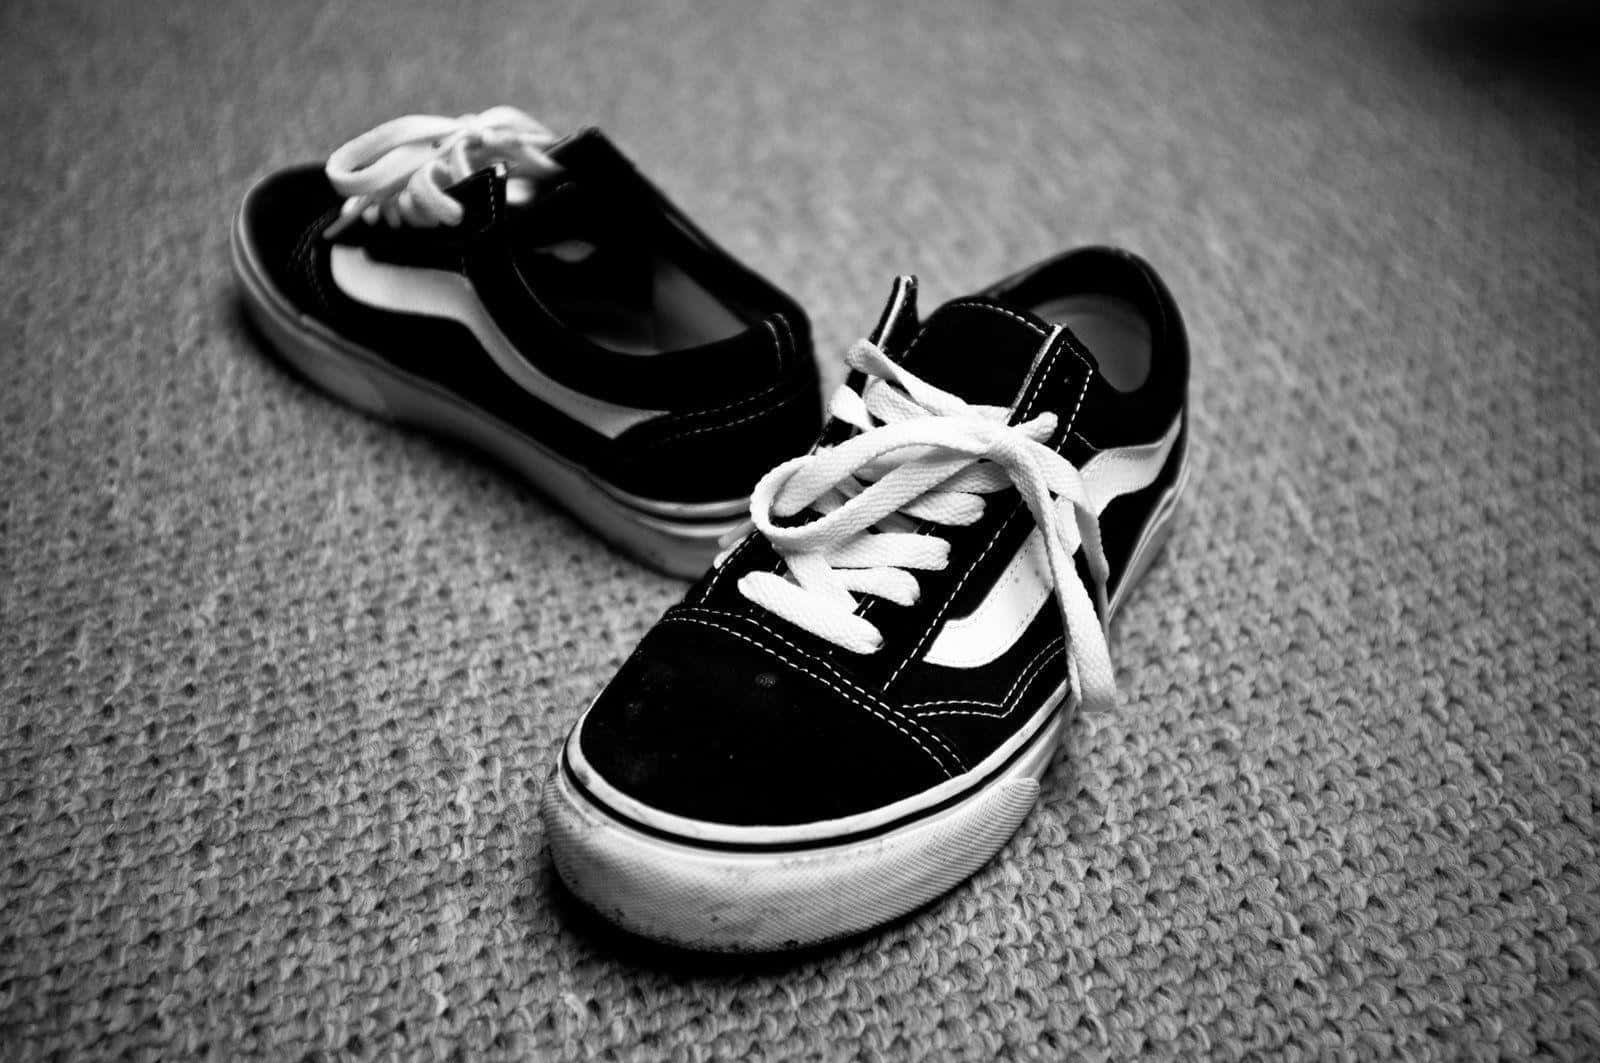 Vans Old Skool Shoes In Black And White